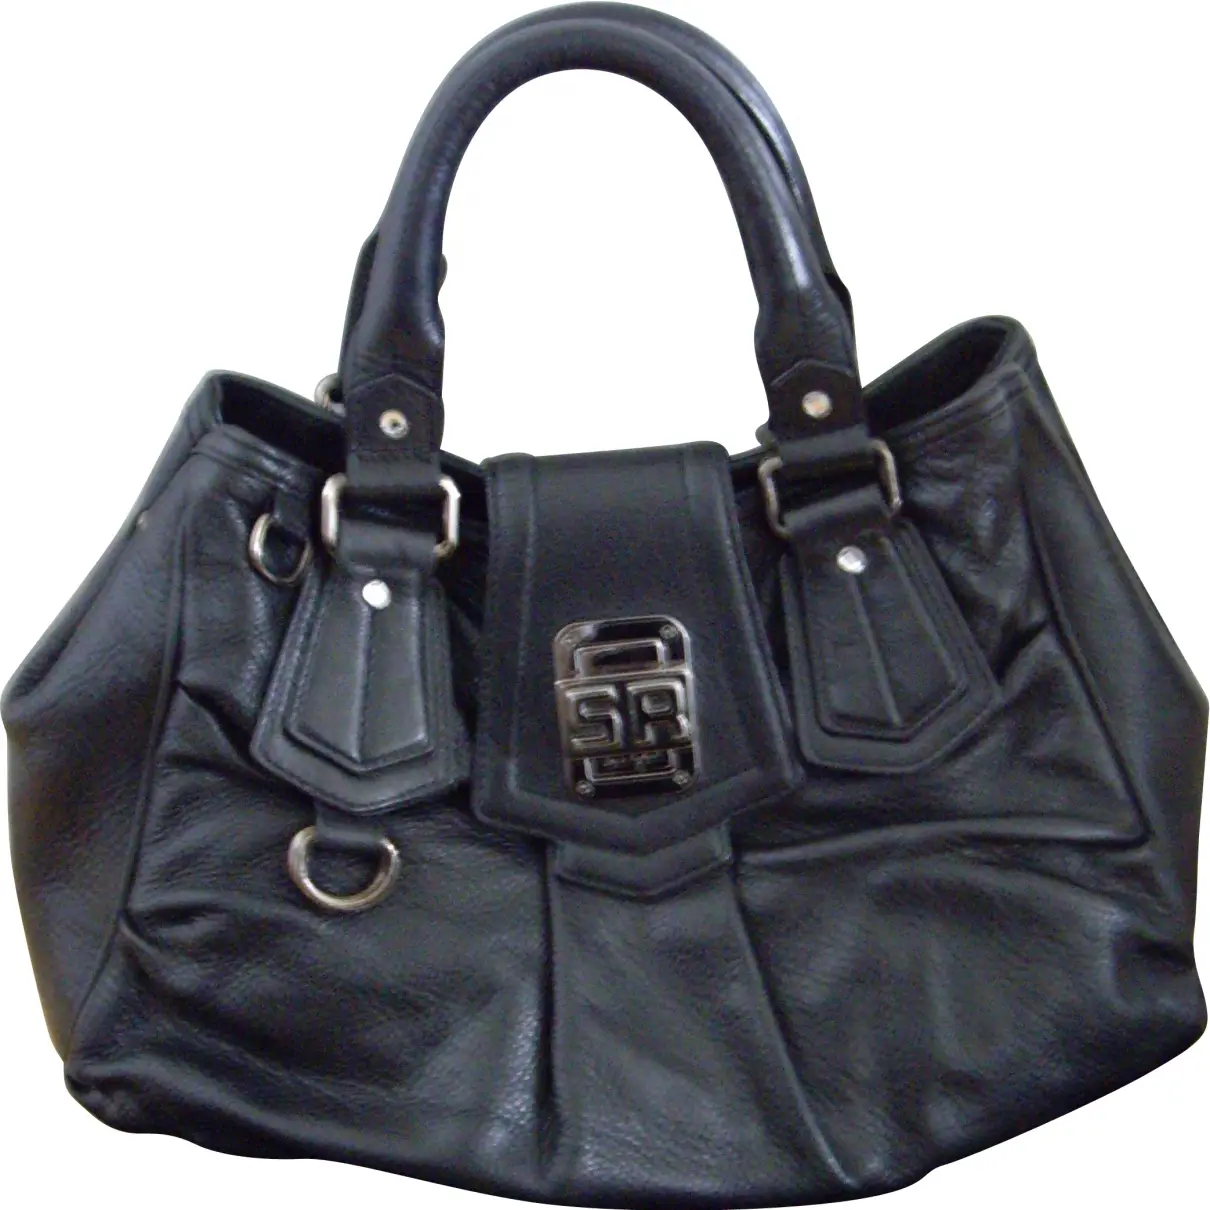 Black Leather Handbag Sonia Rykiel